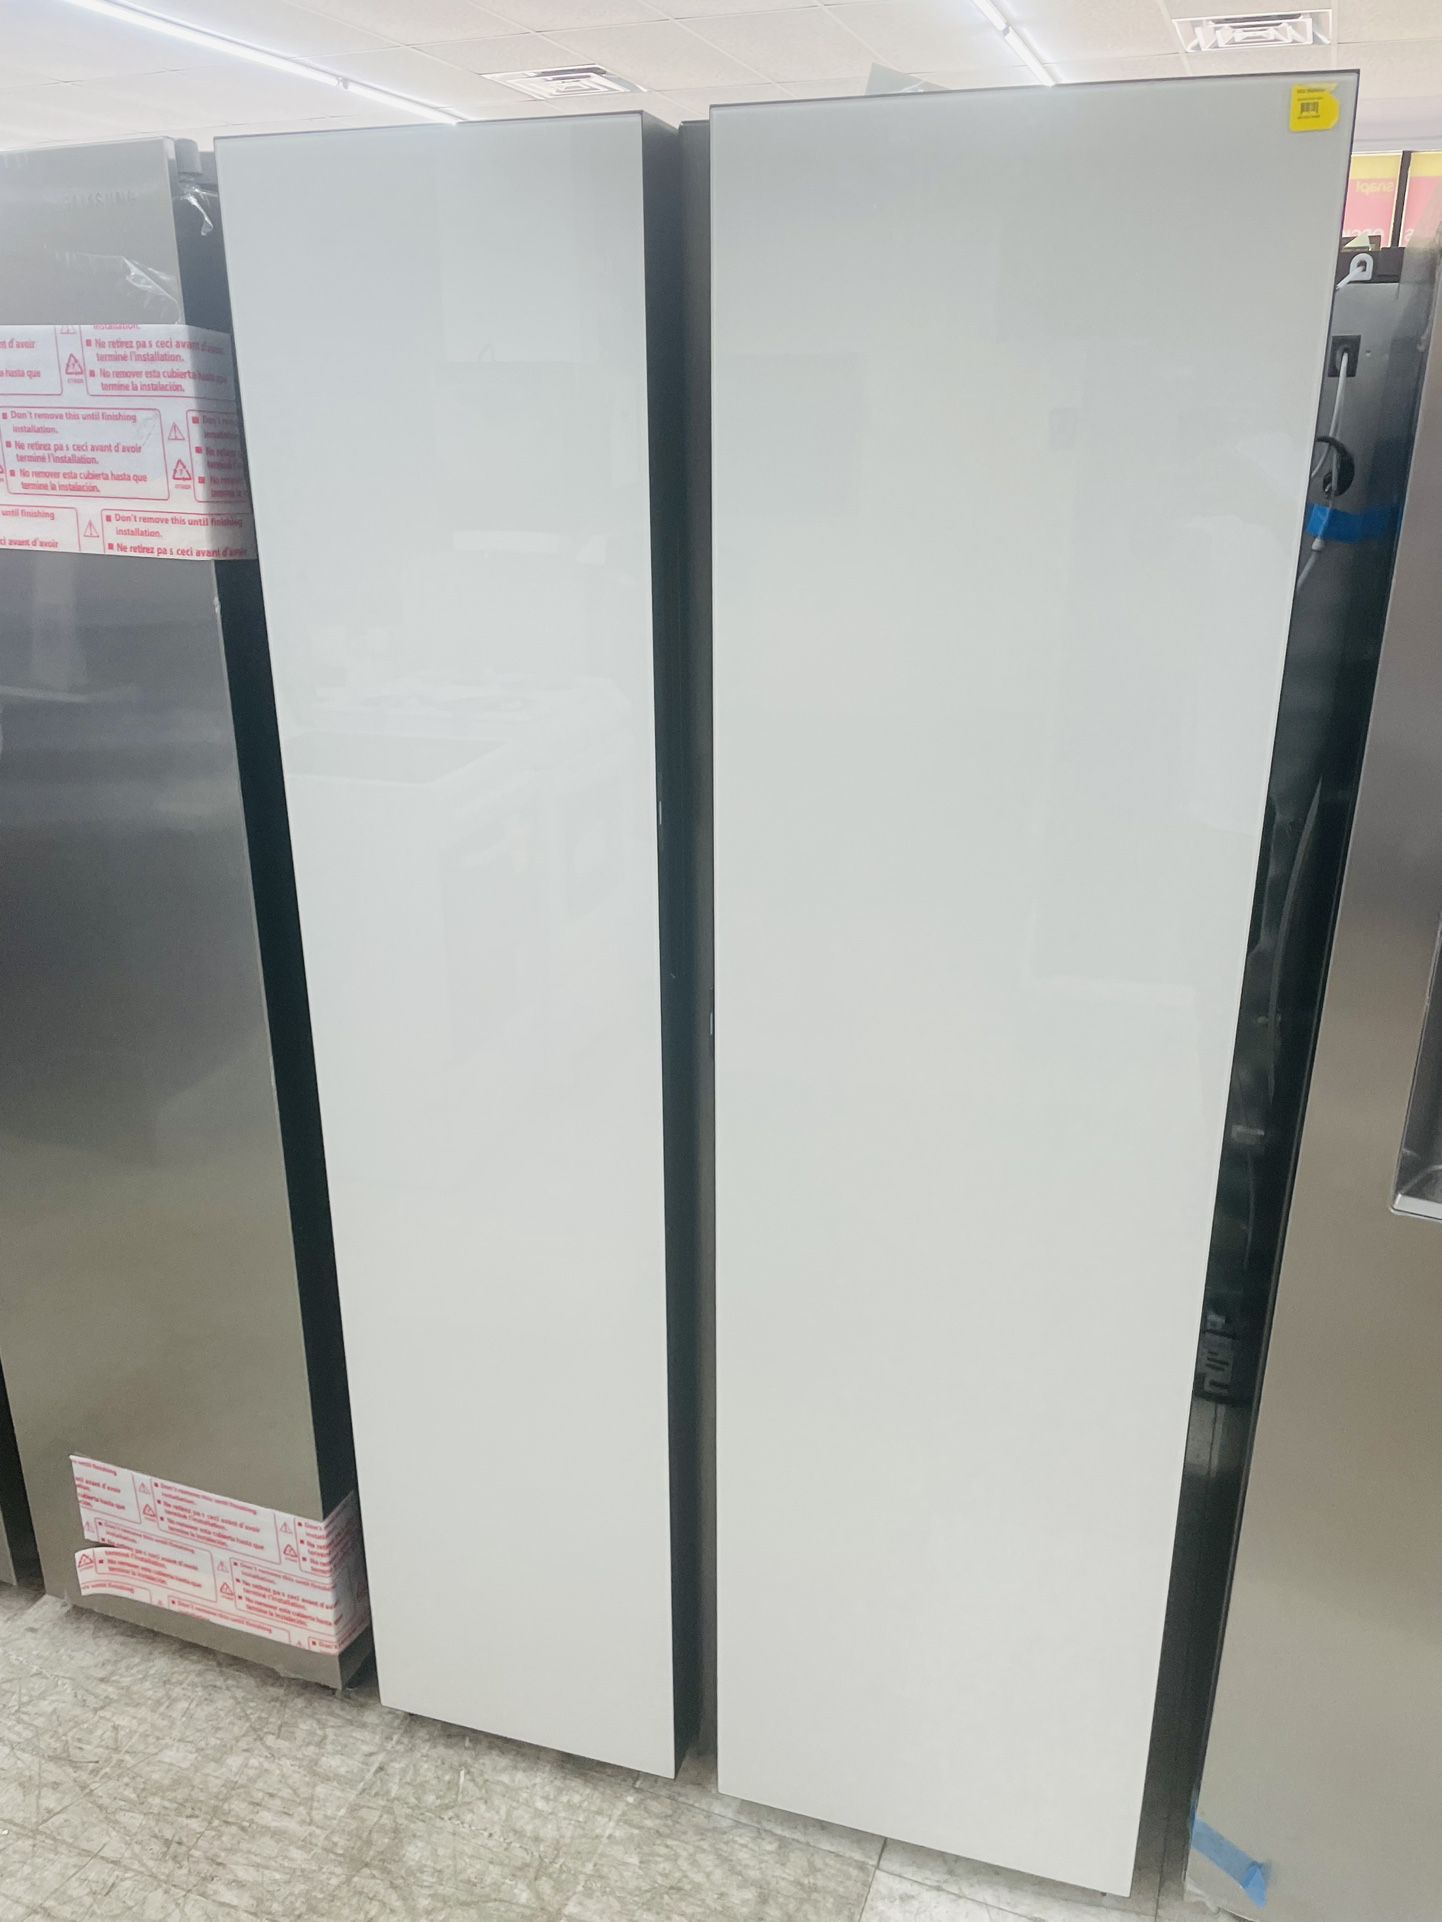 🔥🔥36” Samsung Refrigerator 